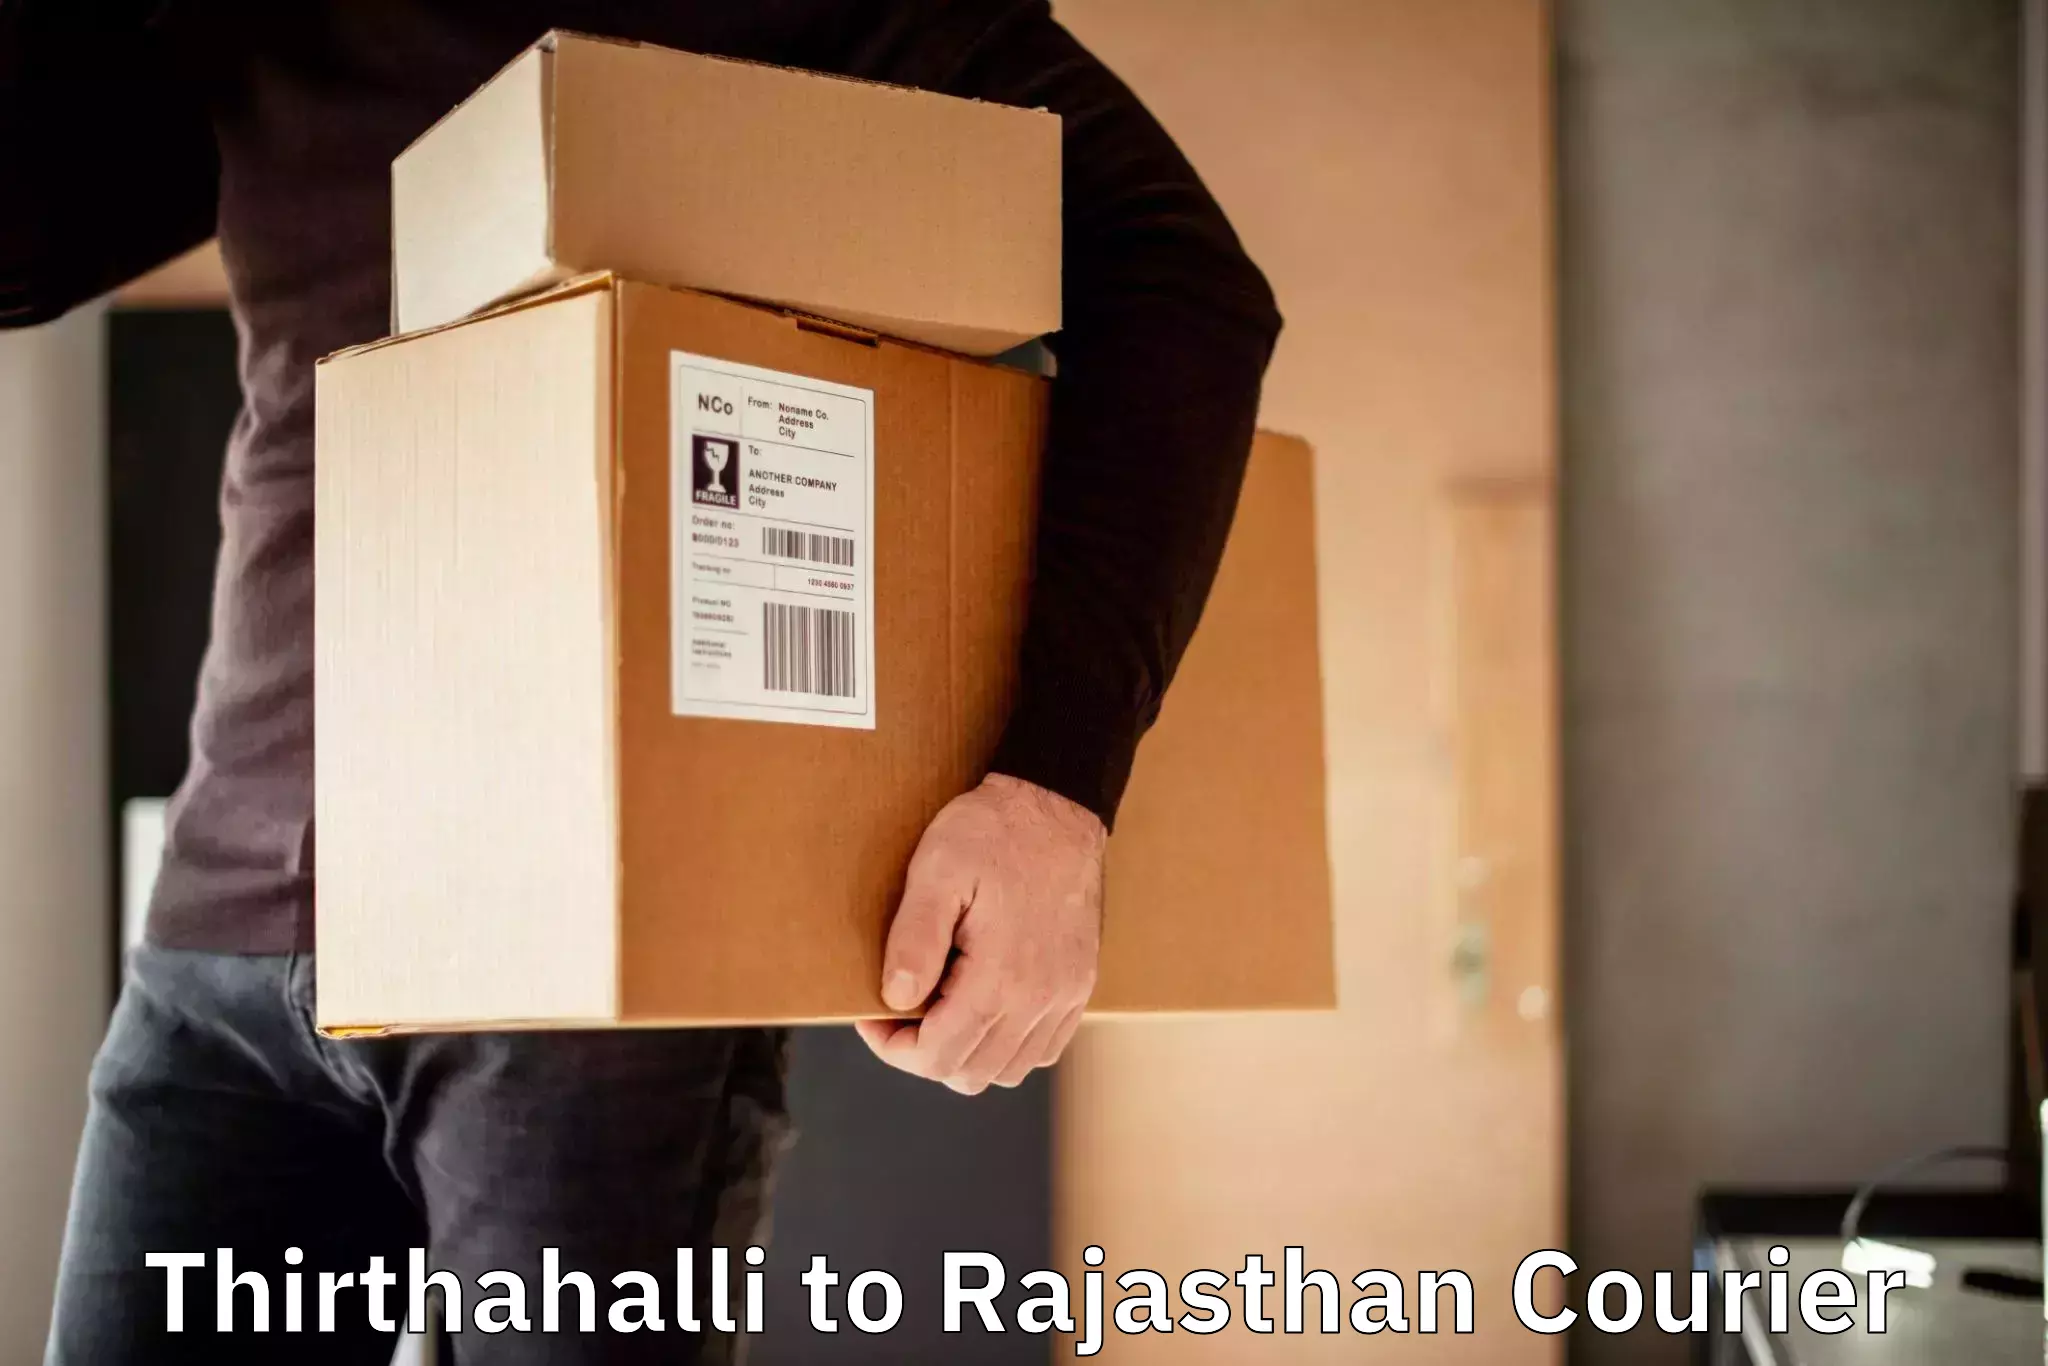 Courier service comparison Thirthahalli to Deoli